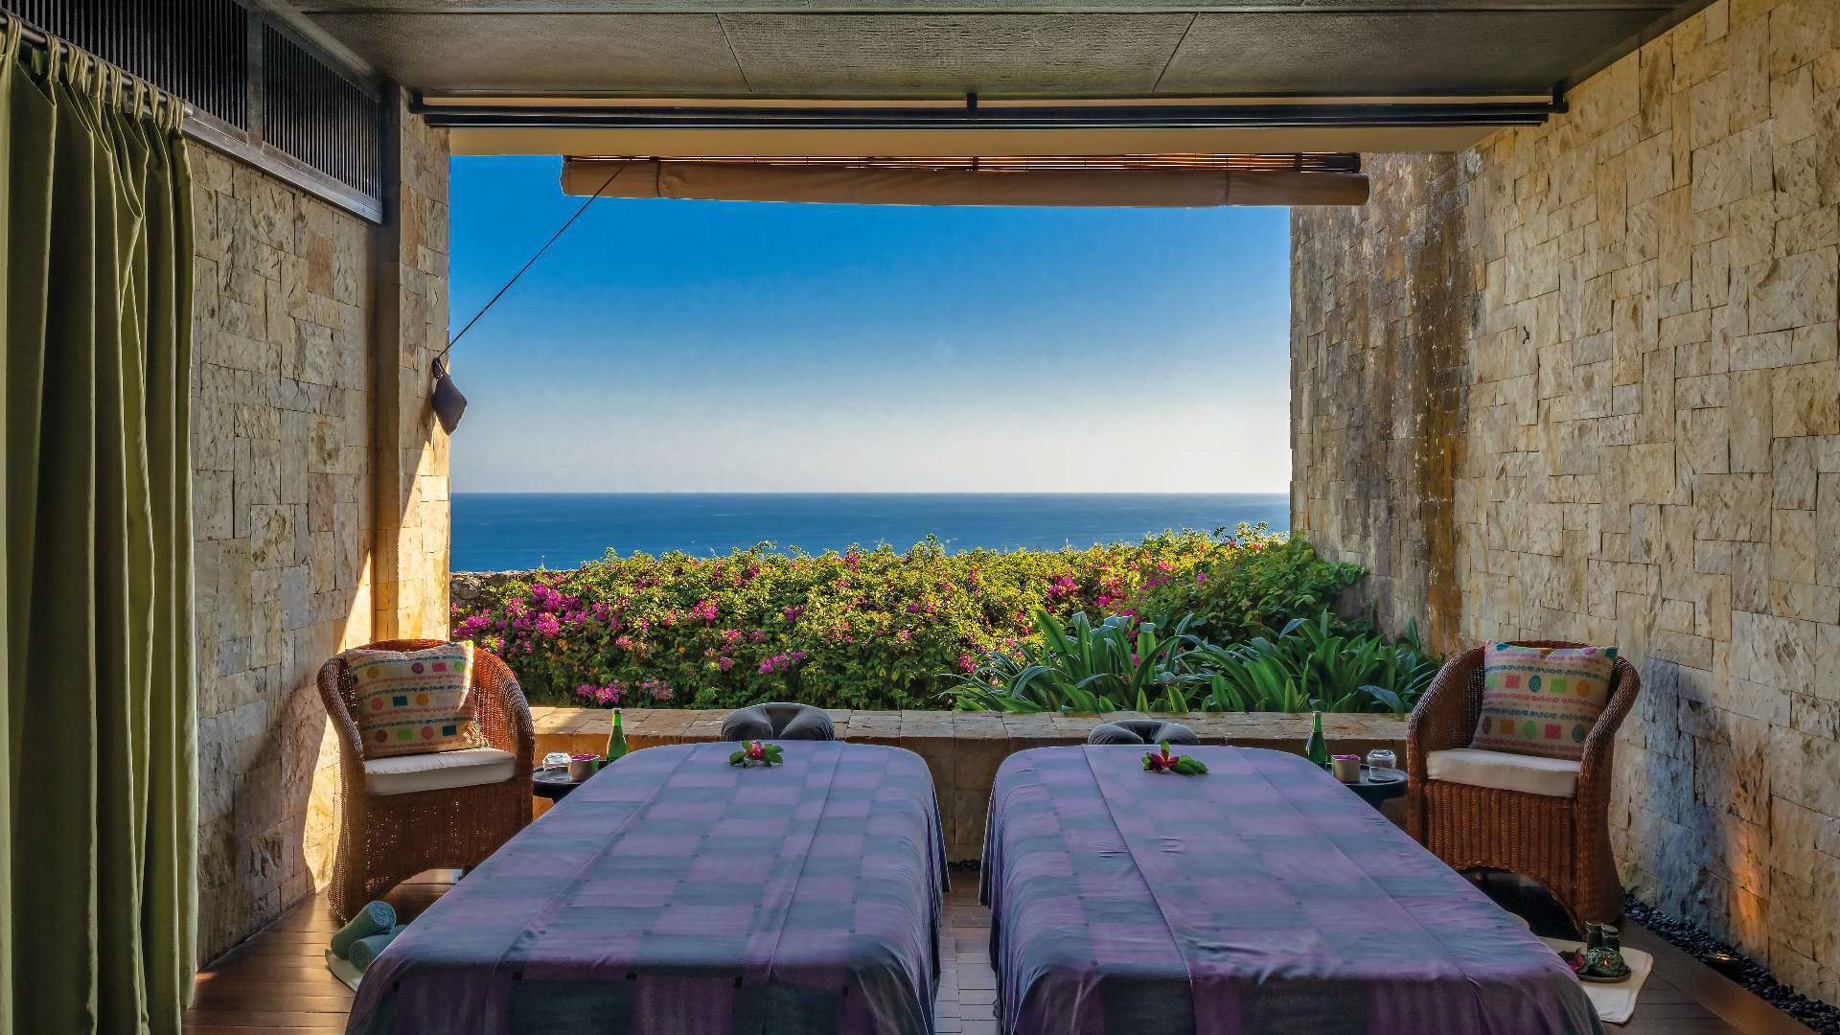 Bvlgari Resort Bali – Uluwatu, Bali, Indonesia – The Bvlgari Spa Ocean View Double Treatment Room